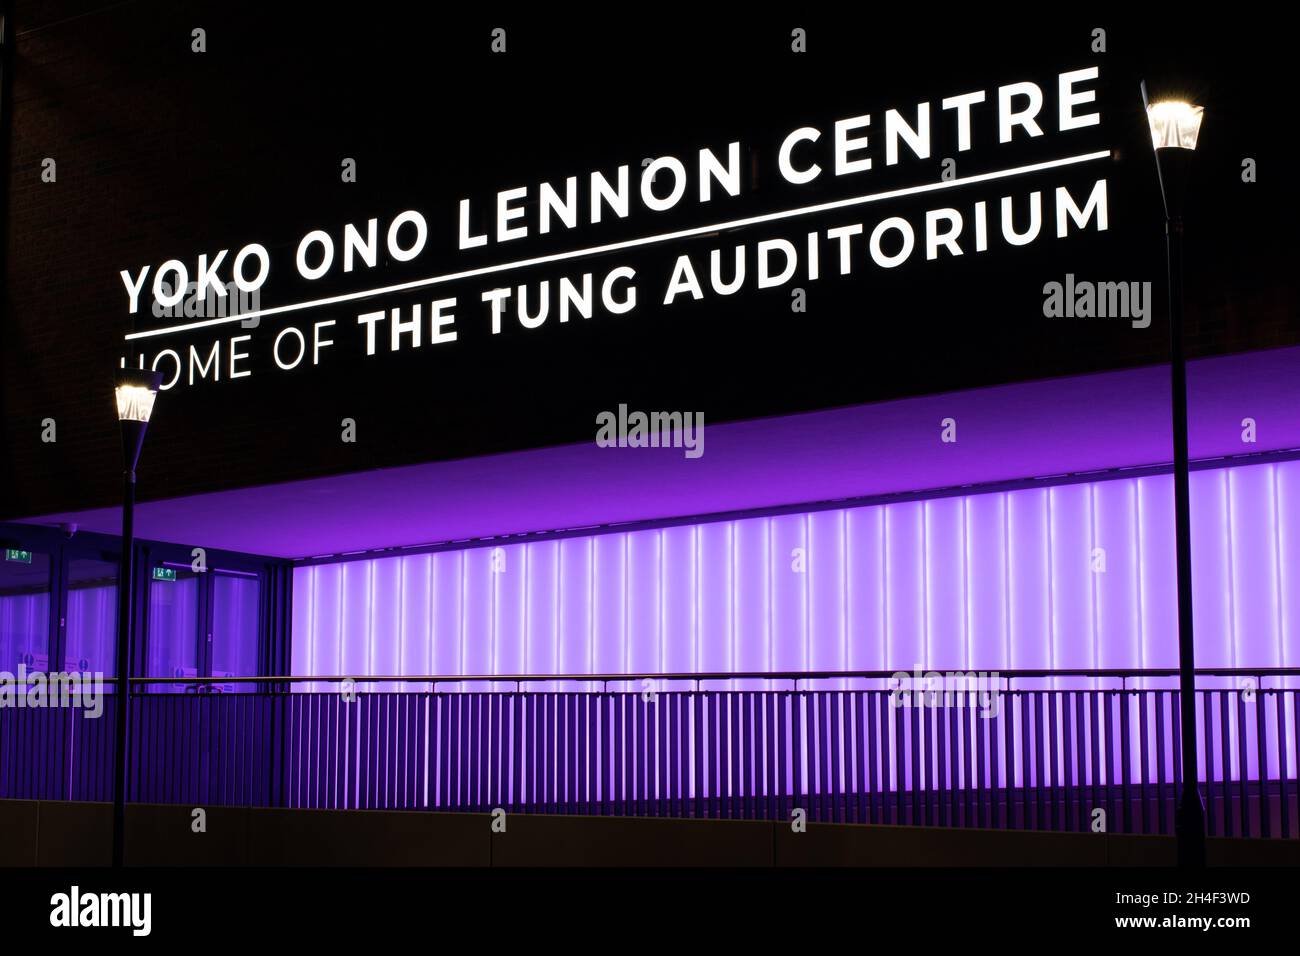 Yoko Ono Lennon Centre, University of Liverpool Tung Auditorium. Stockfoto